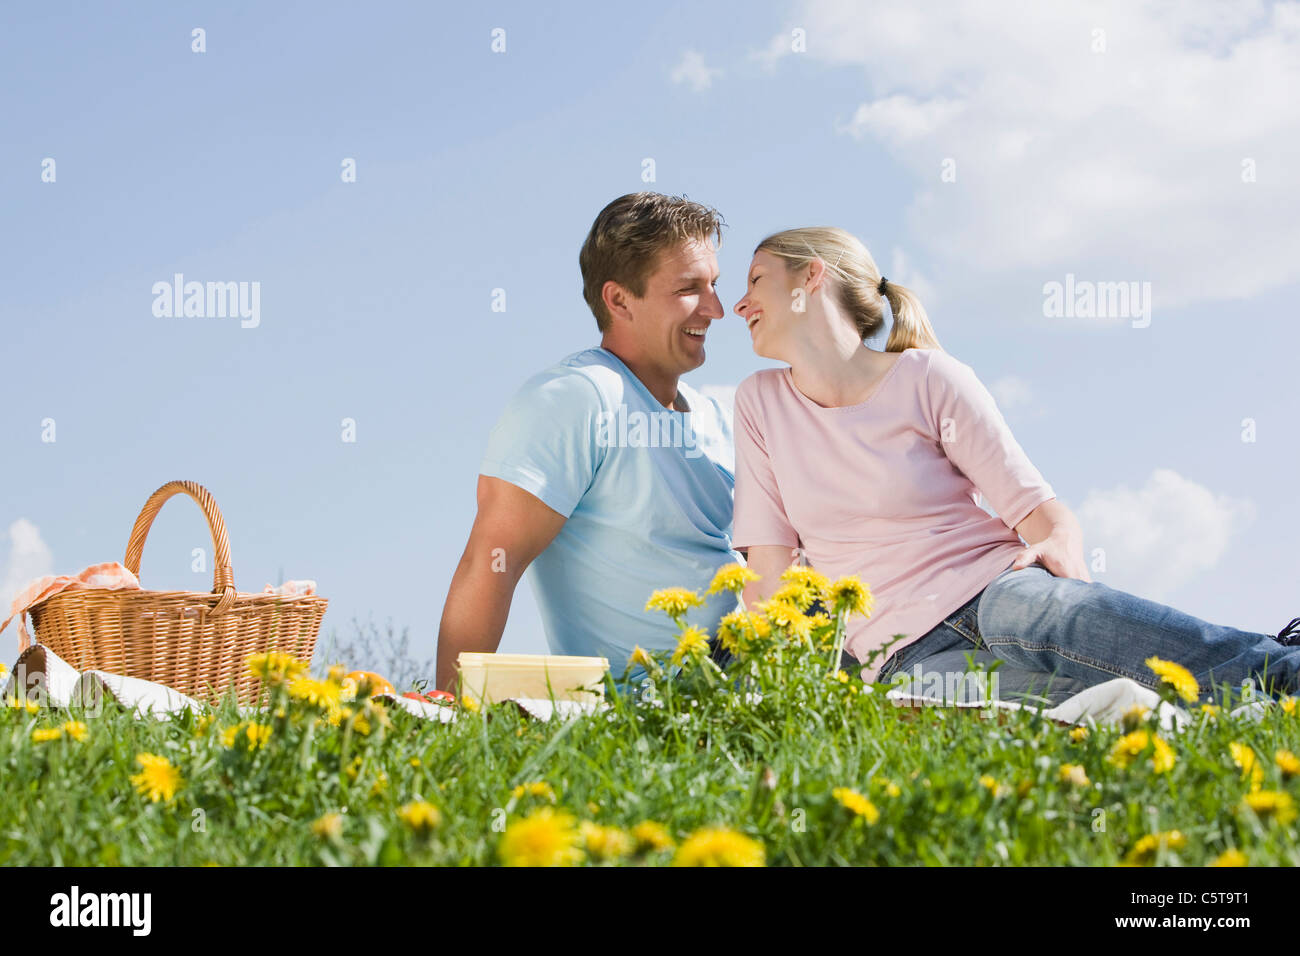 Germany, Bavaria, Munich, Young couple having picnic, smiling, portrait Stock Photo